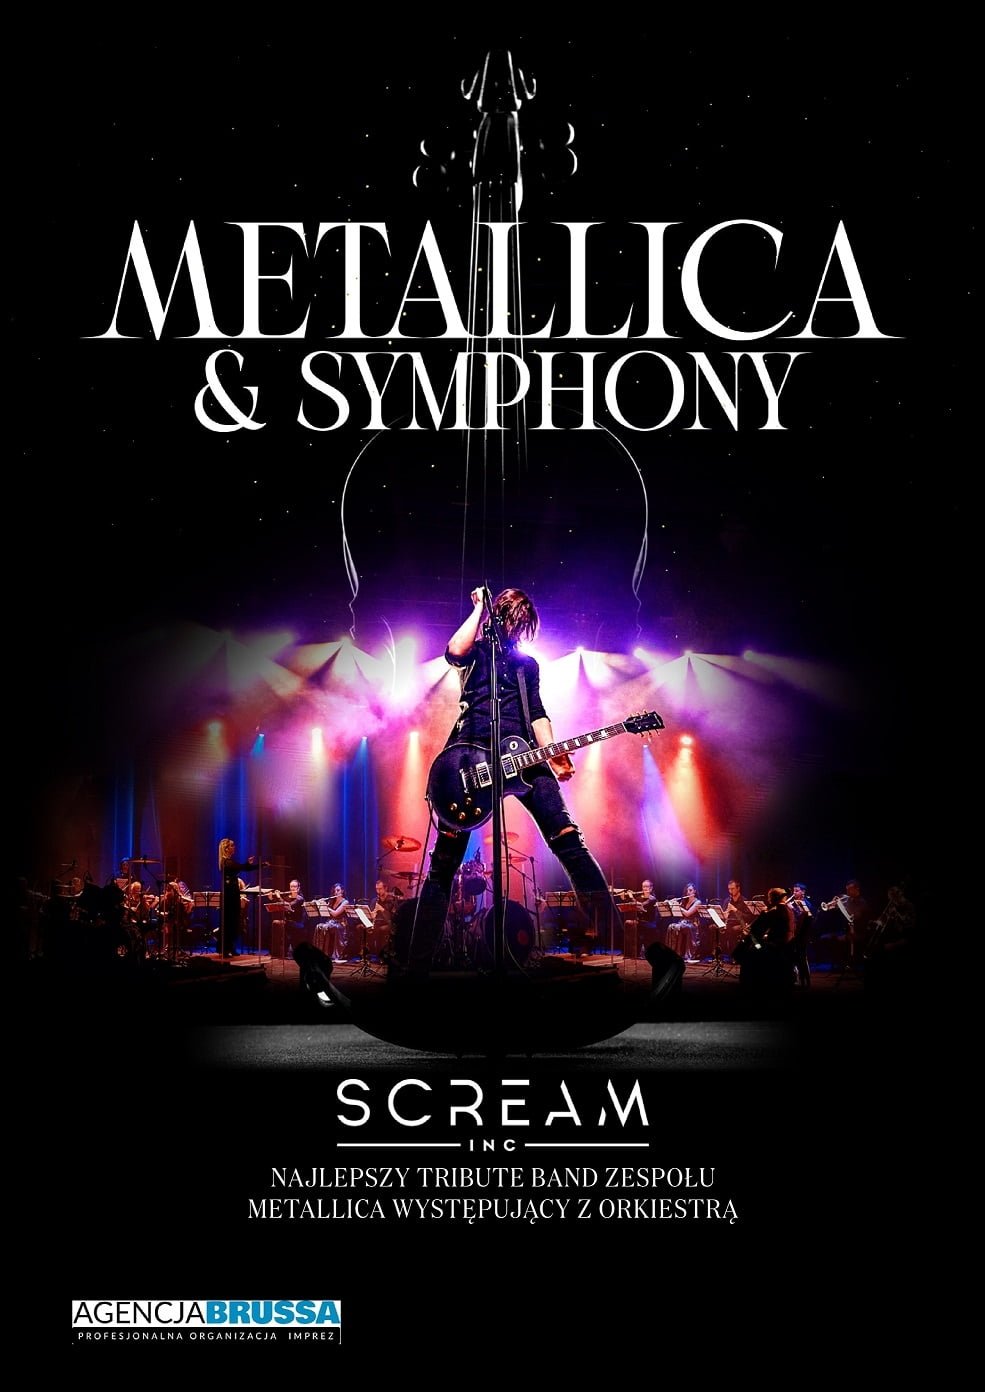 Metallica & Symphony by SCREAM INC. (518555)